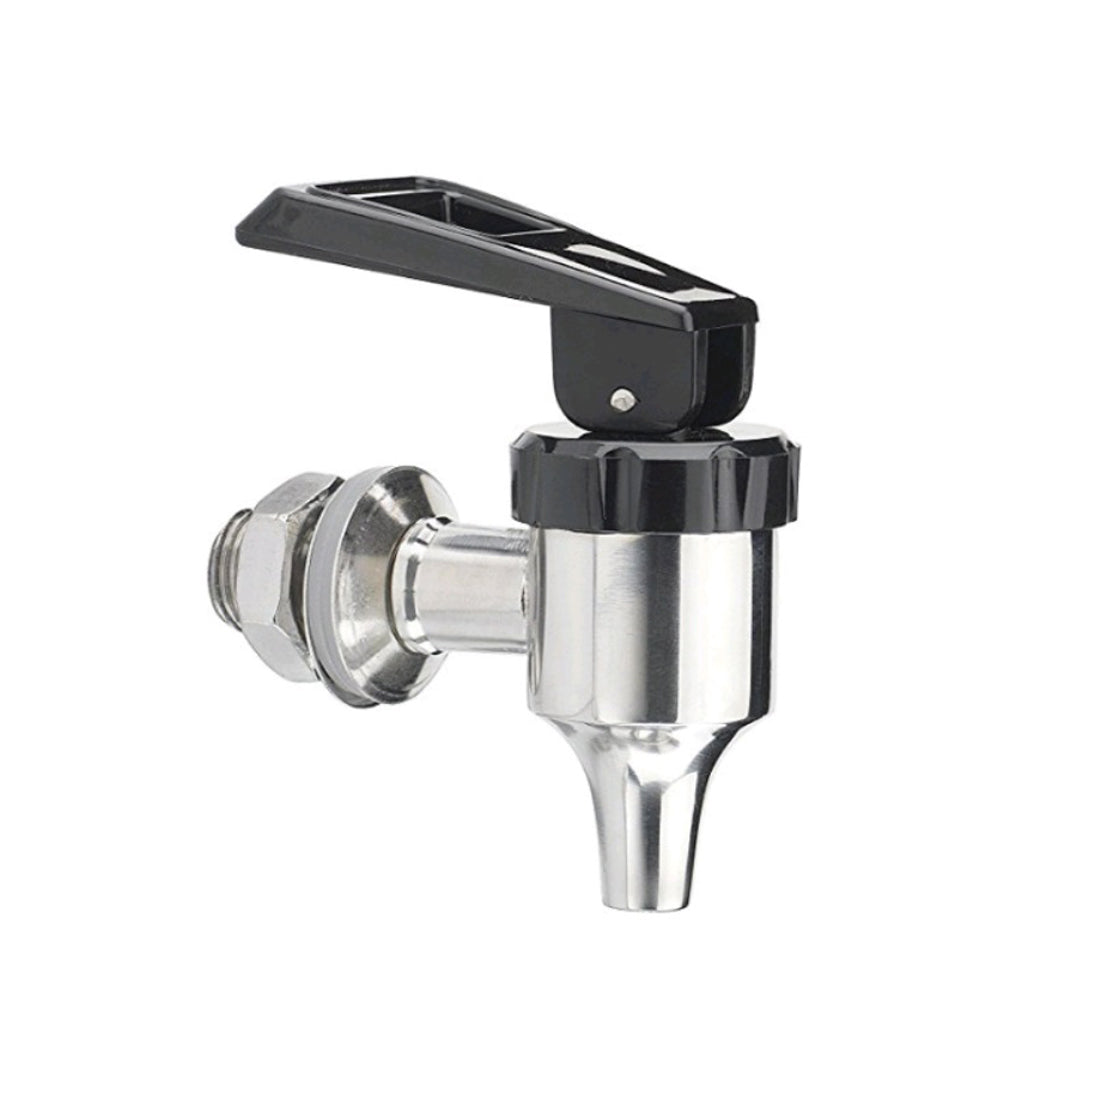 2 Pack Beverage Dispenser Spigot Faucet - Stainless Steel – Premium 16mm Spring Loaded